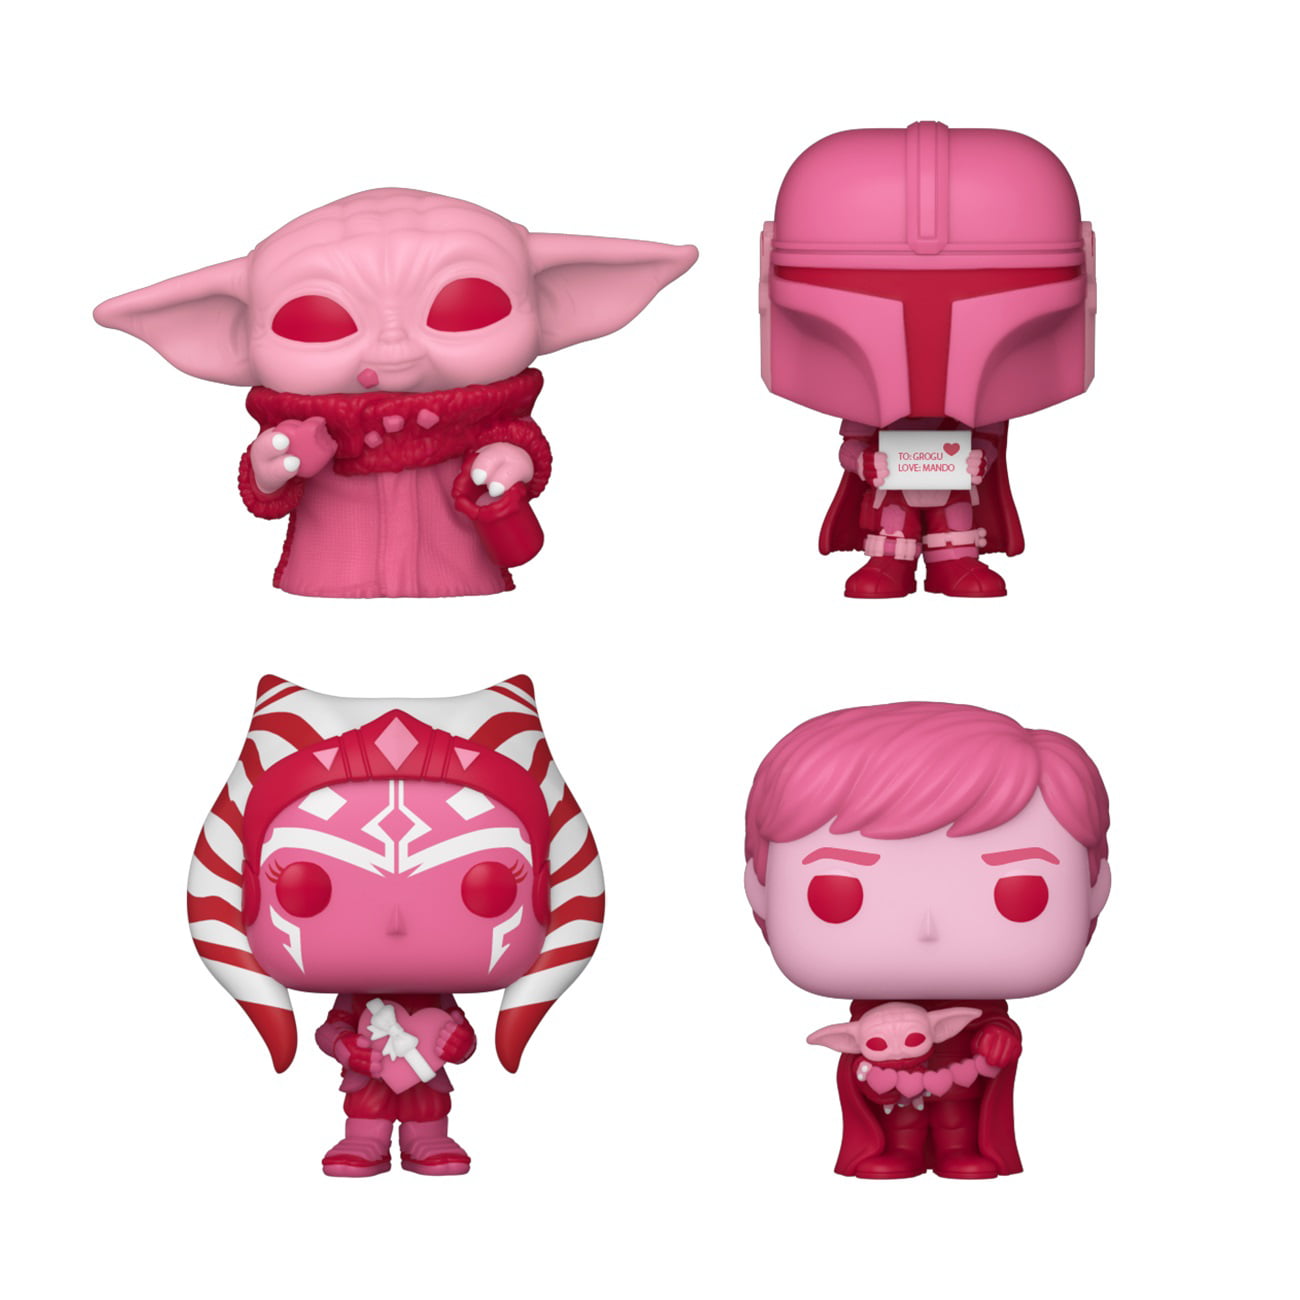 Funko POP The Mandalorian Star Wars San Valentin Version Figure Pink